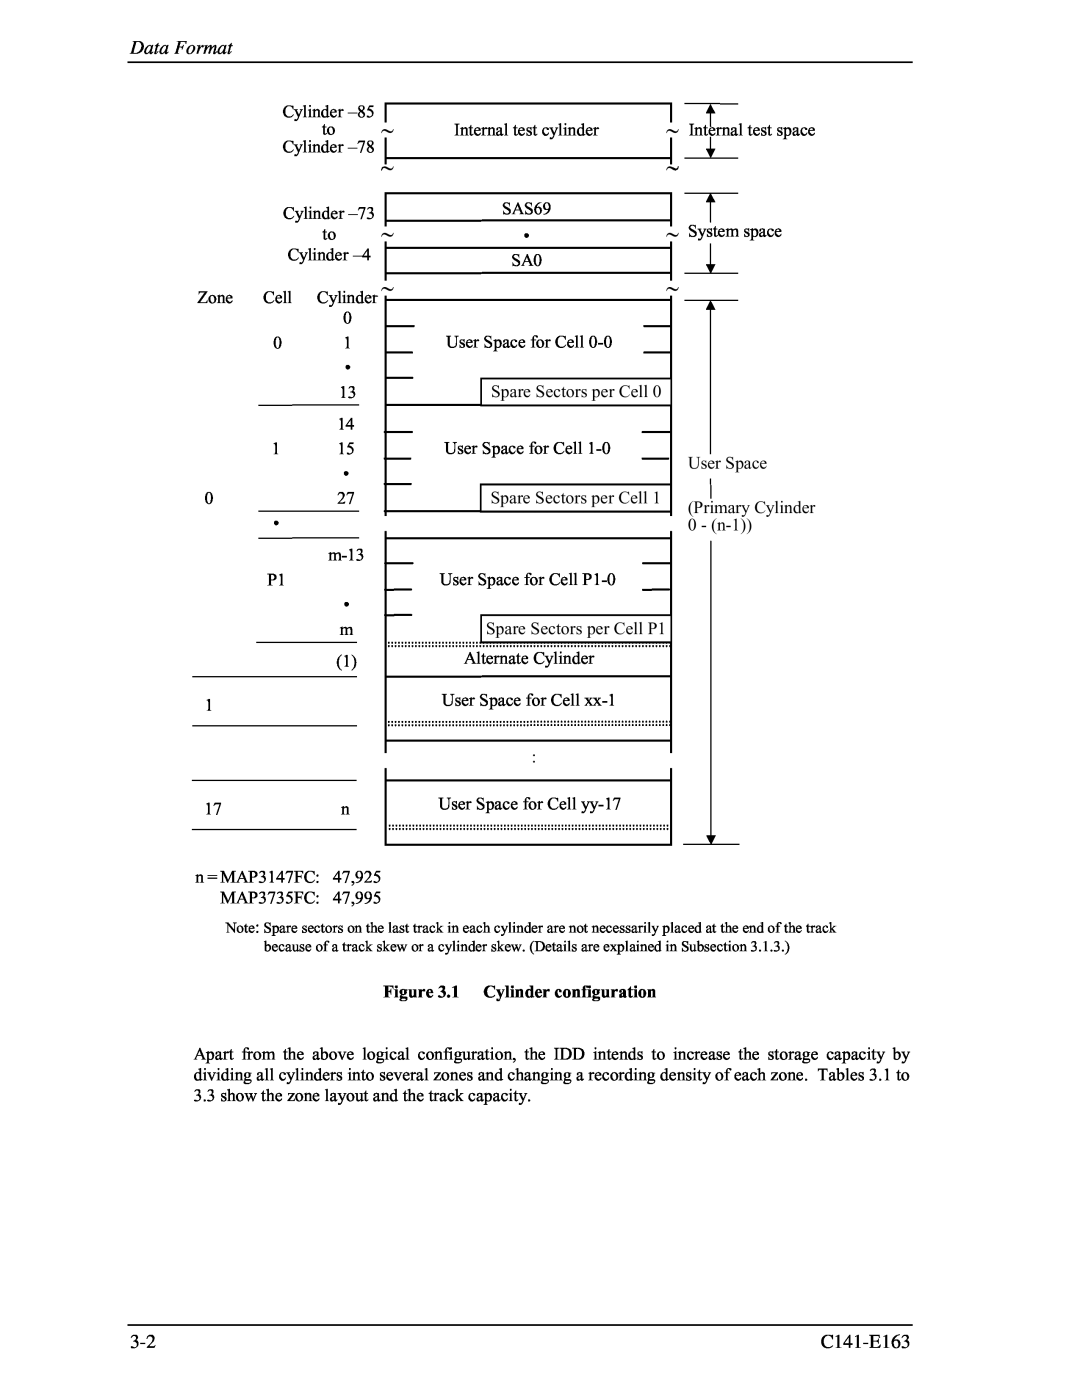 Fujitsu MAP3147FC, MAP3735FC manual Data Format, 1 Cylinder configuration 